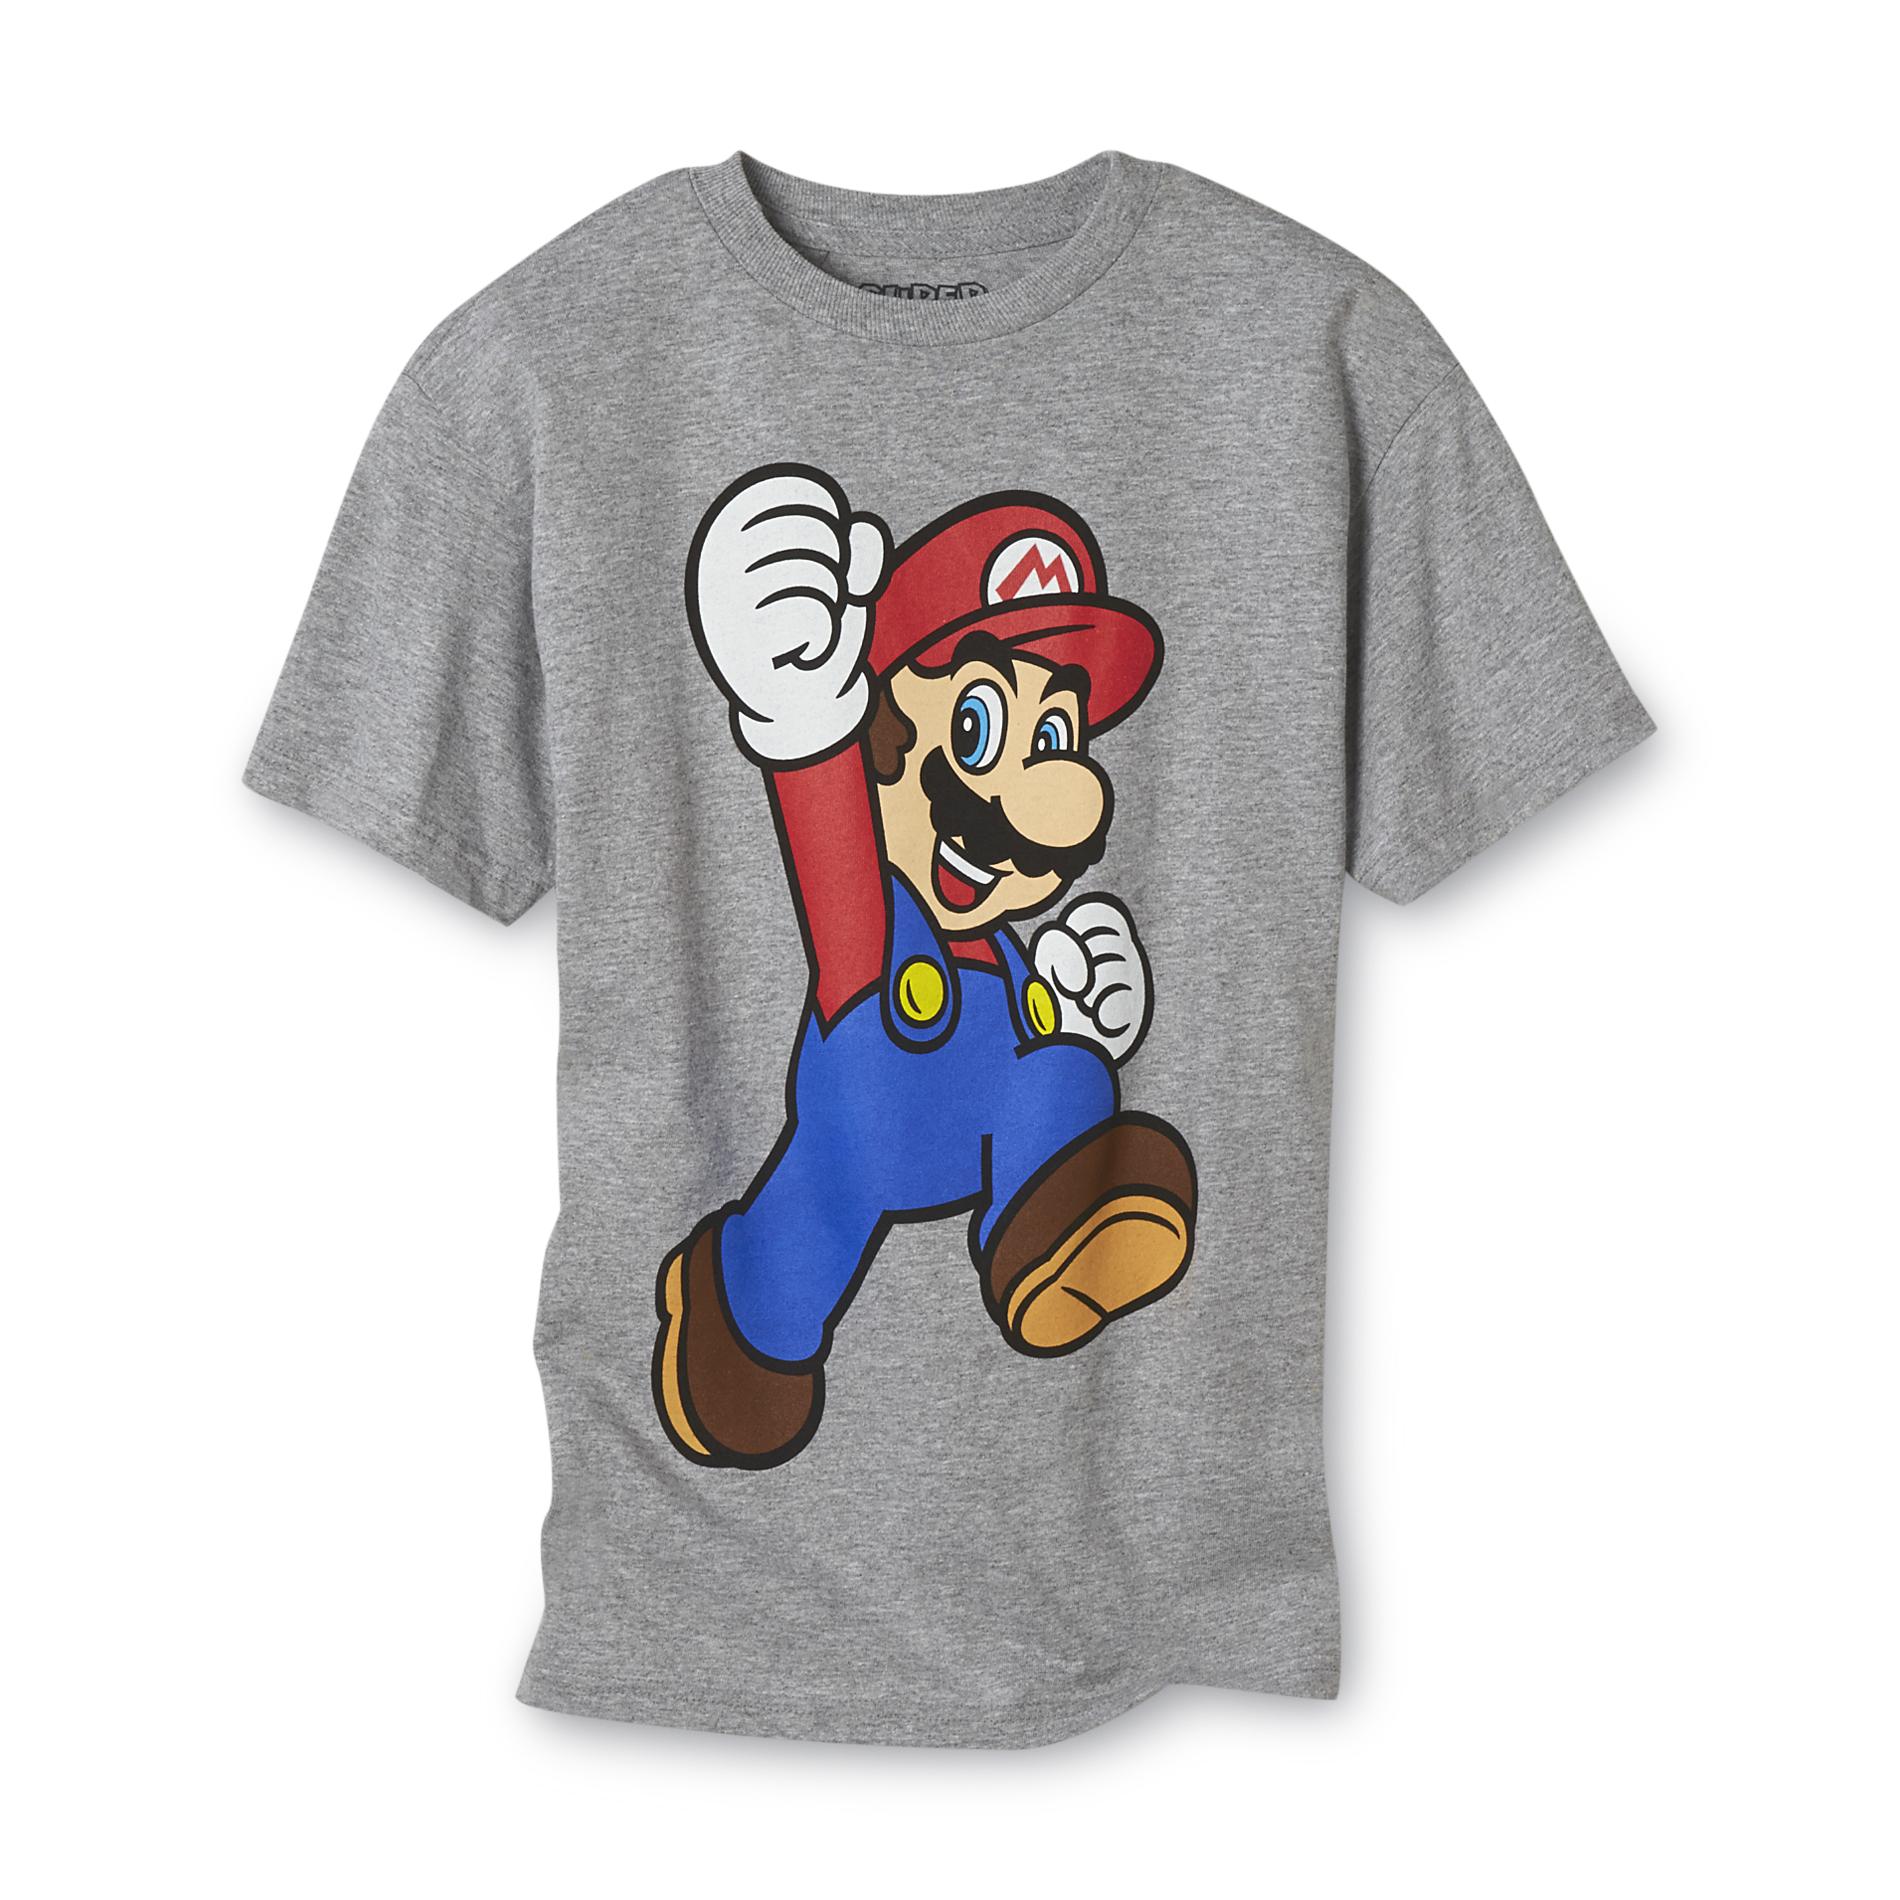 Nintendo Boy's Graphic T-Shirt - Super Mario